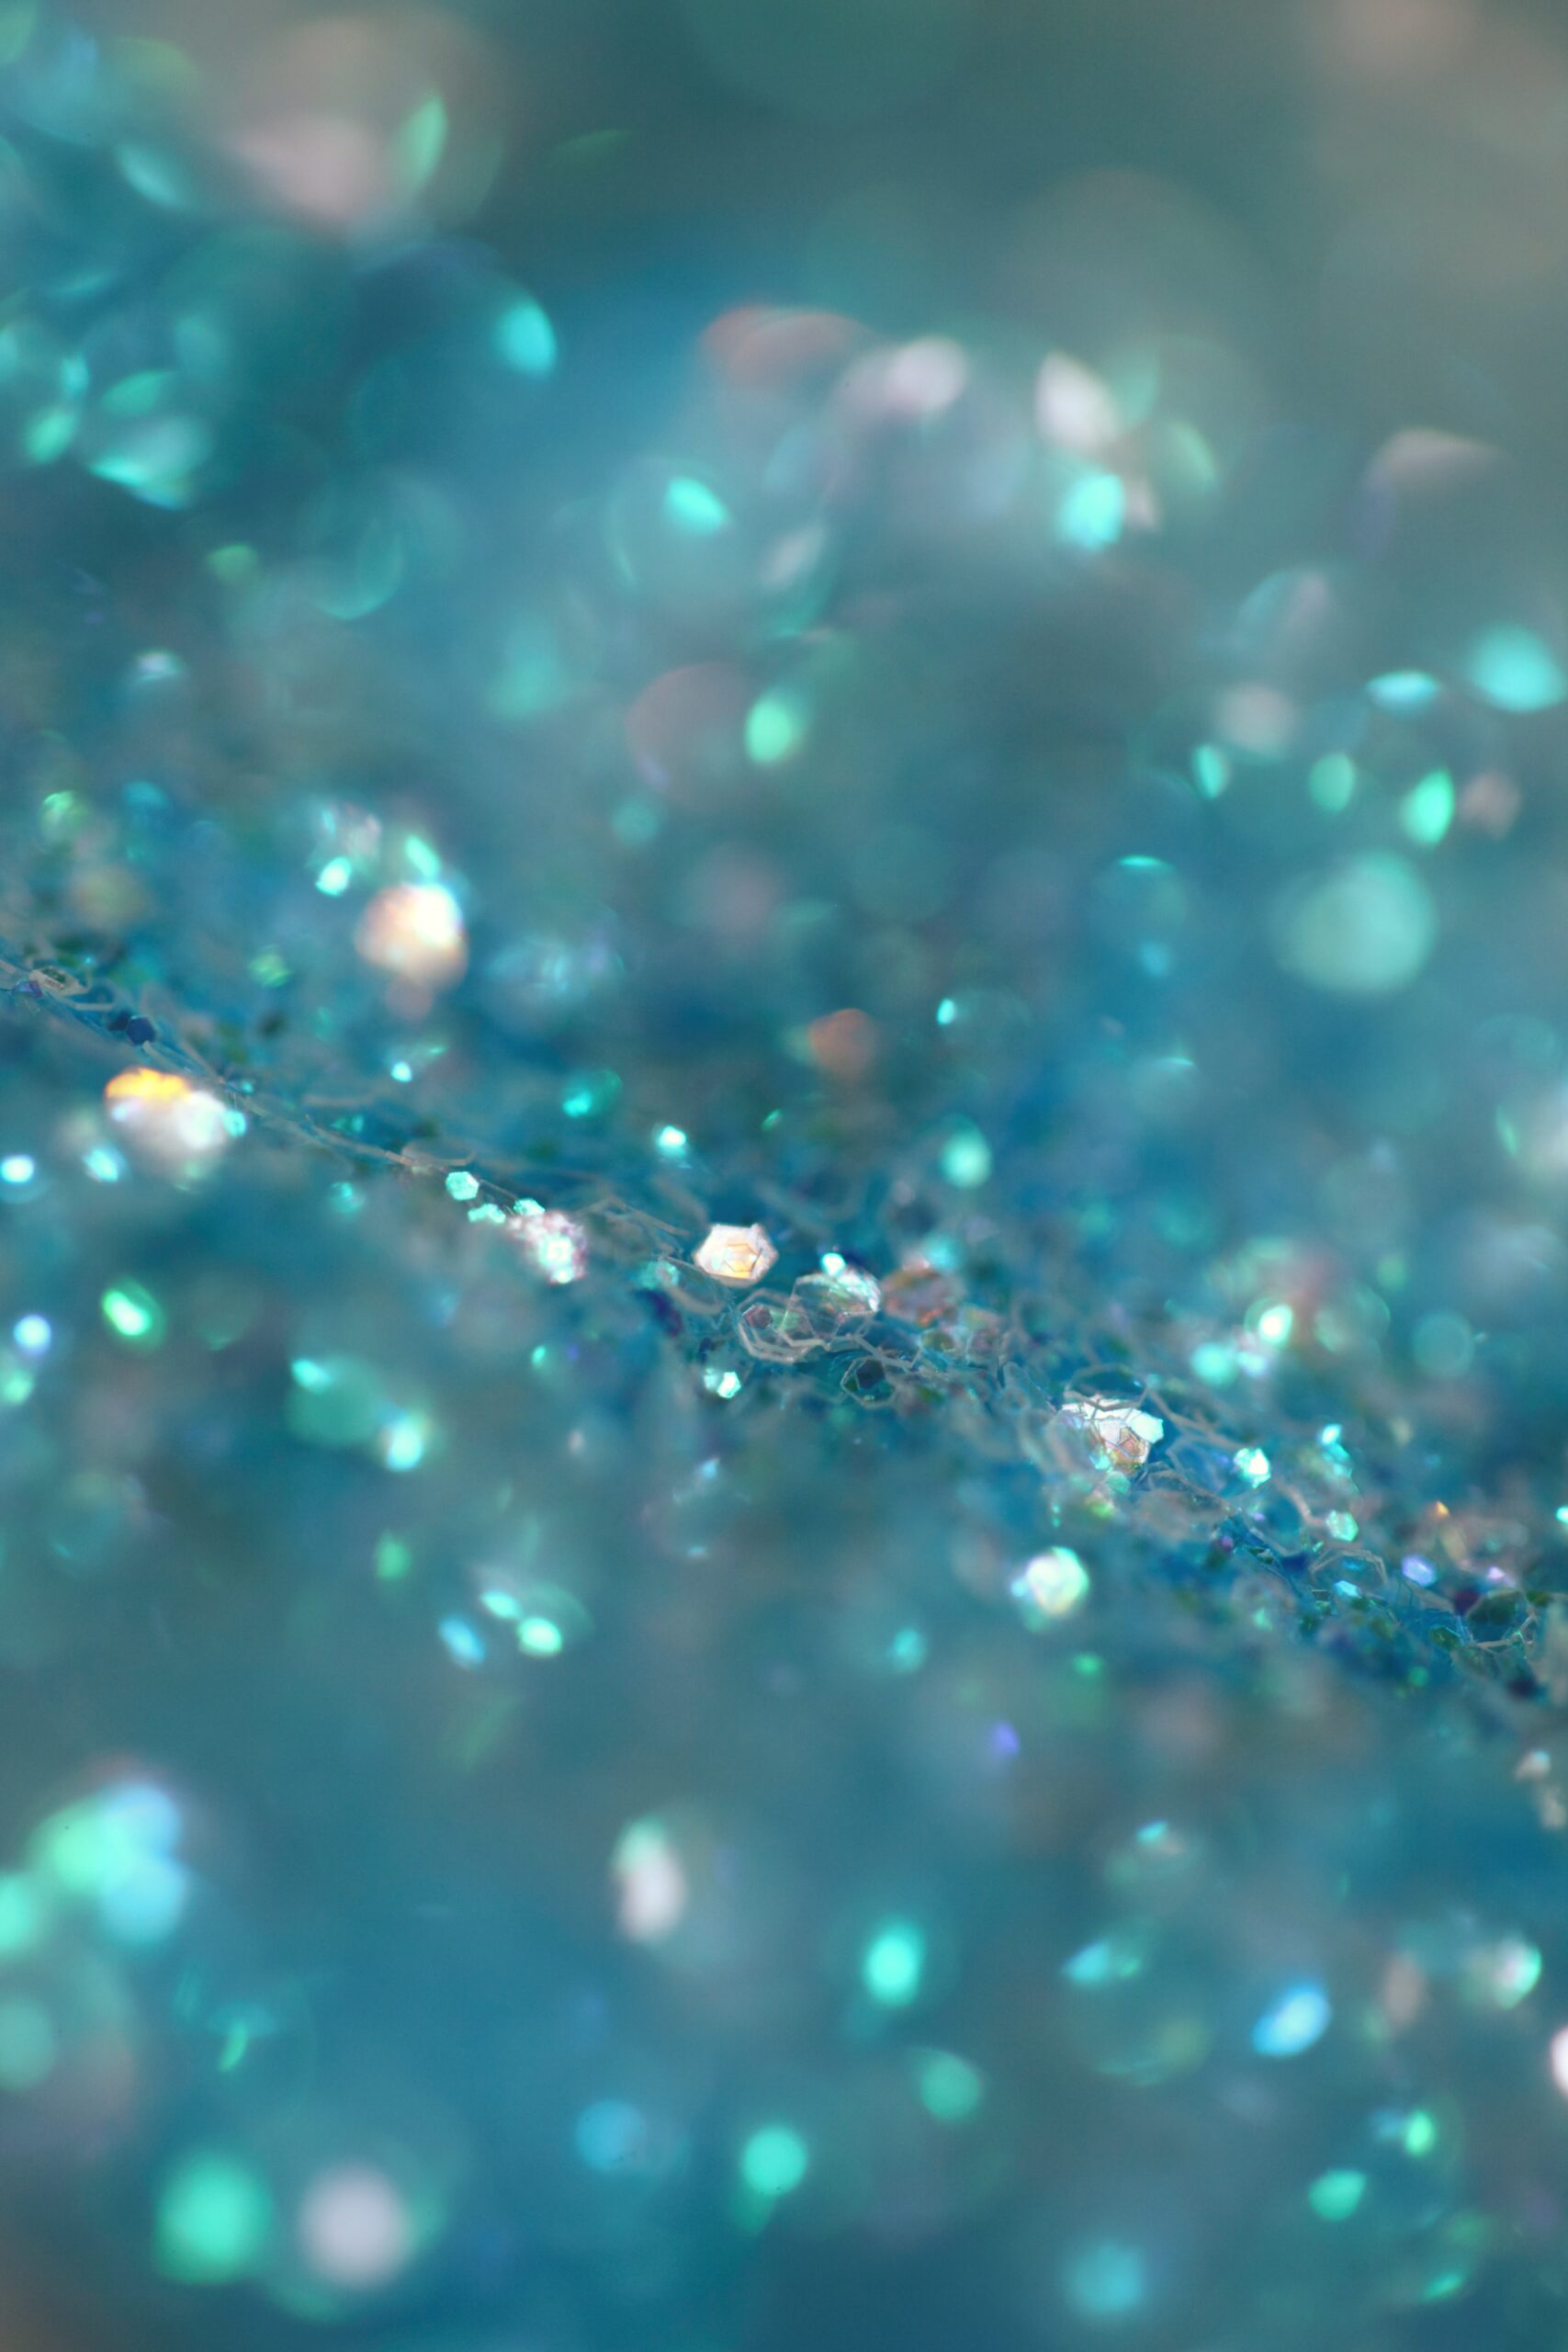 sharon-mccutcheon-background image crystals-unsplash